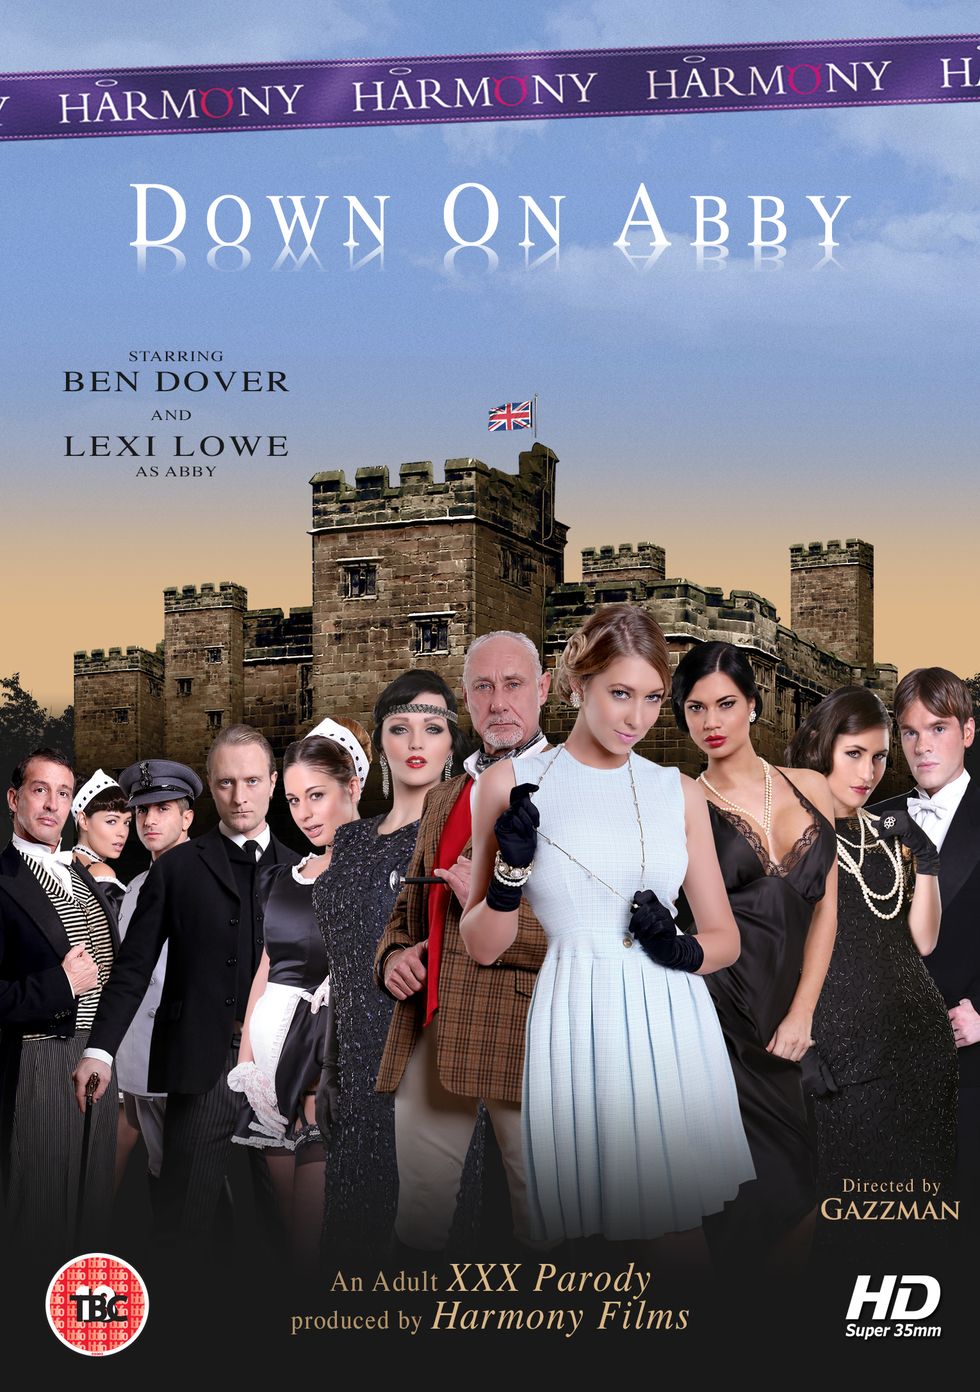 Downton Abbey gets porn parody